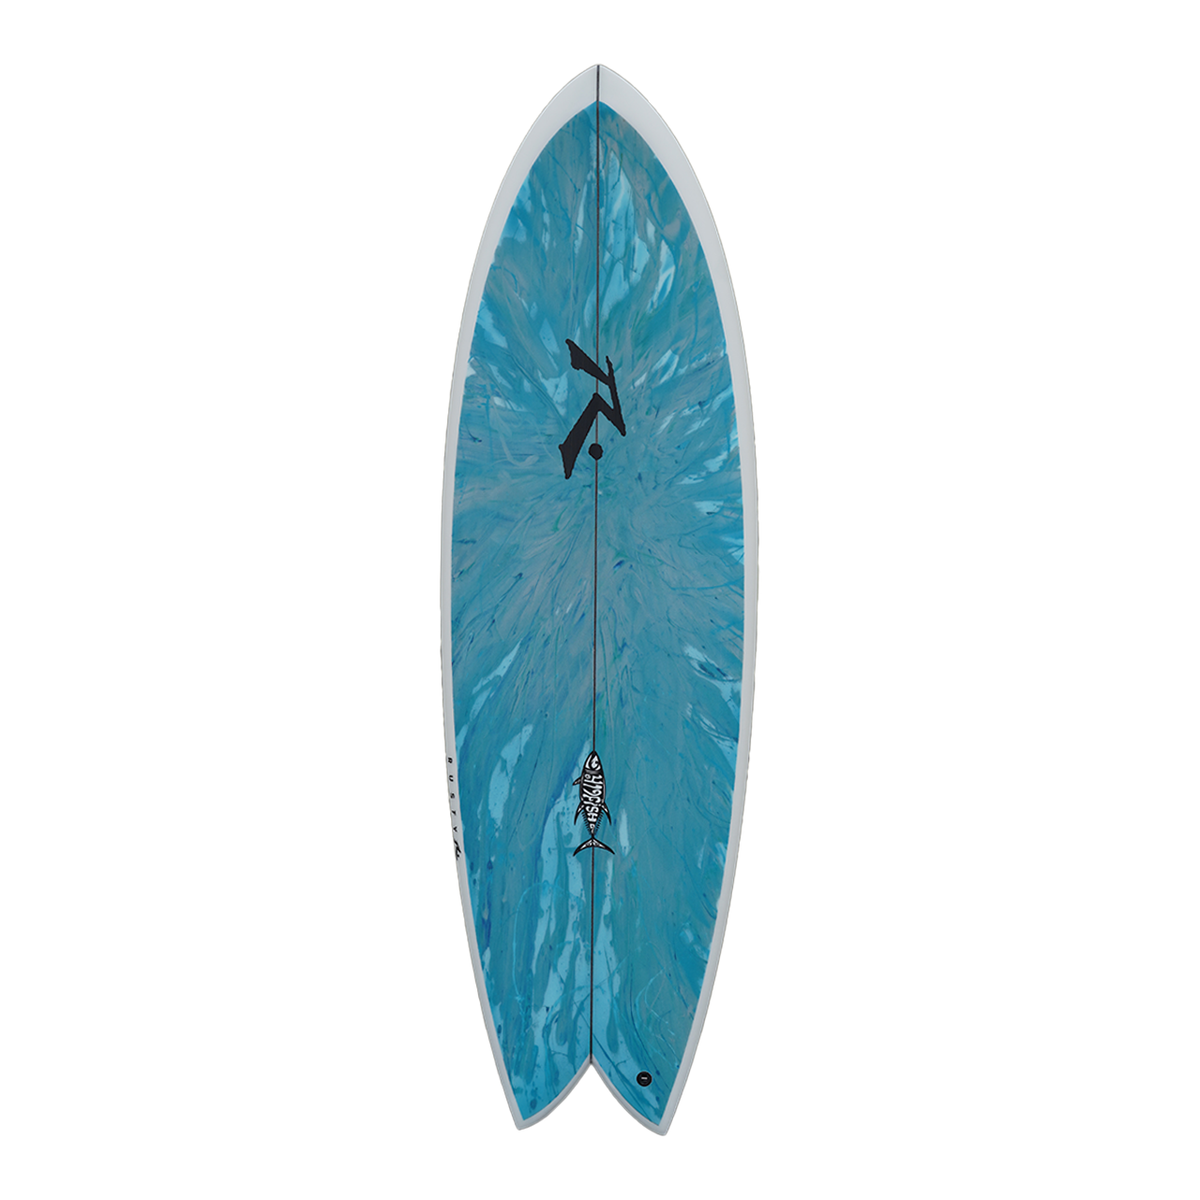 419fish - Alternative - Rusty Surfboards - Top View - Blue Green Swirl